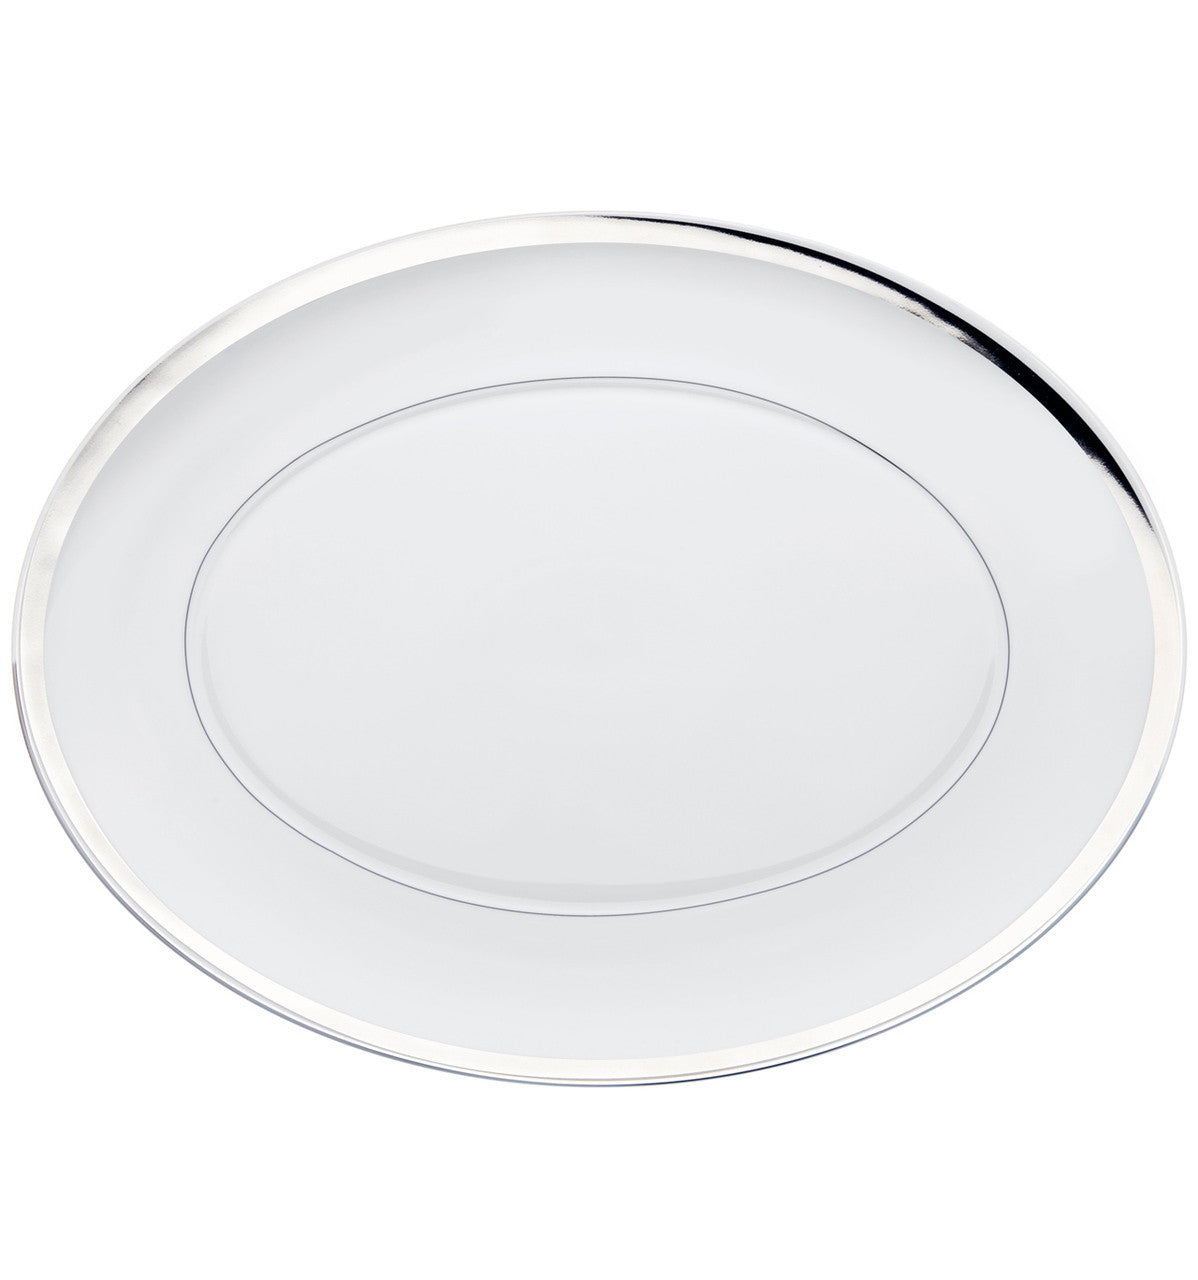 Domo Platina Large Oval Platter - RSVP Style